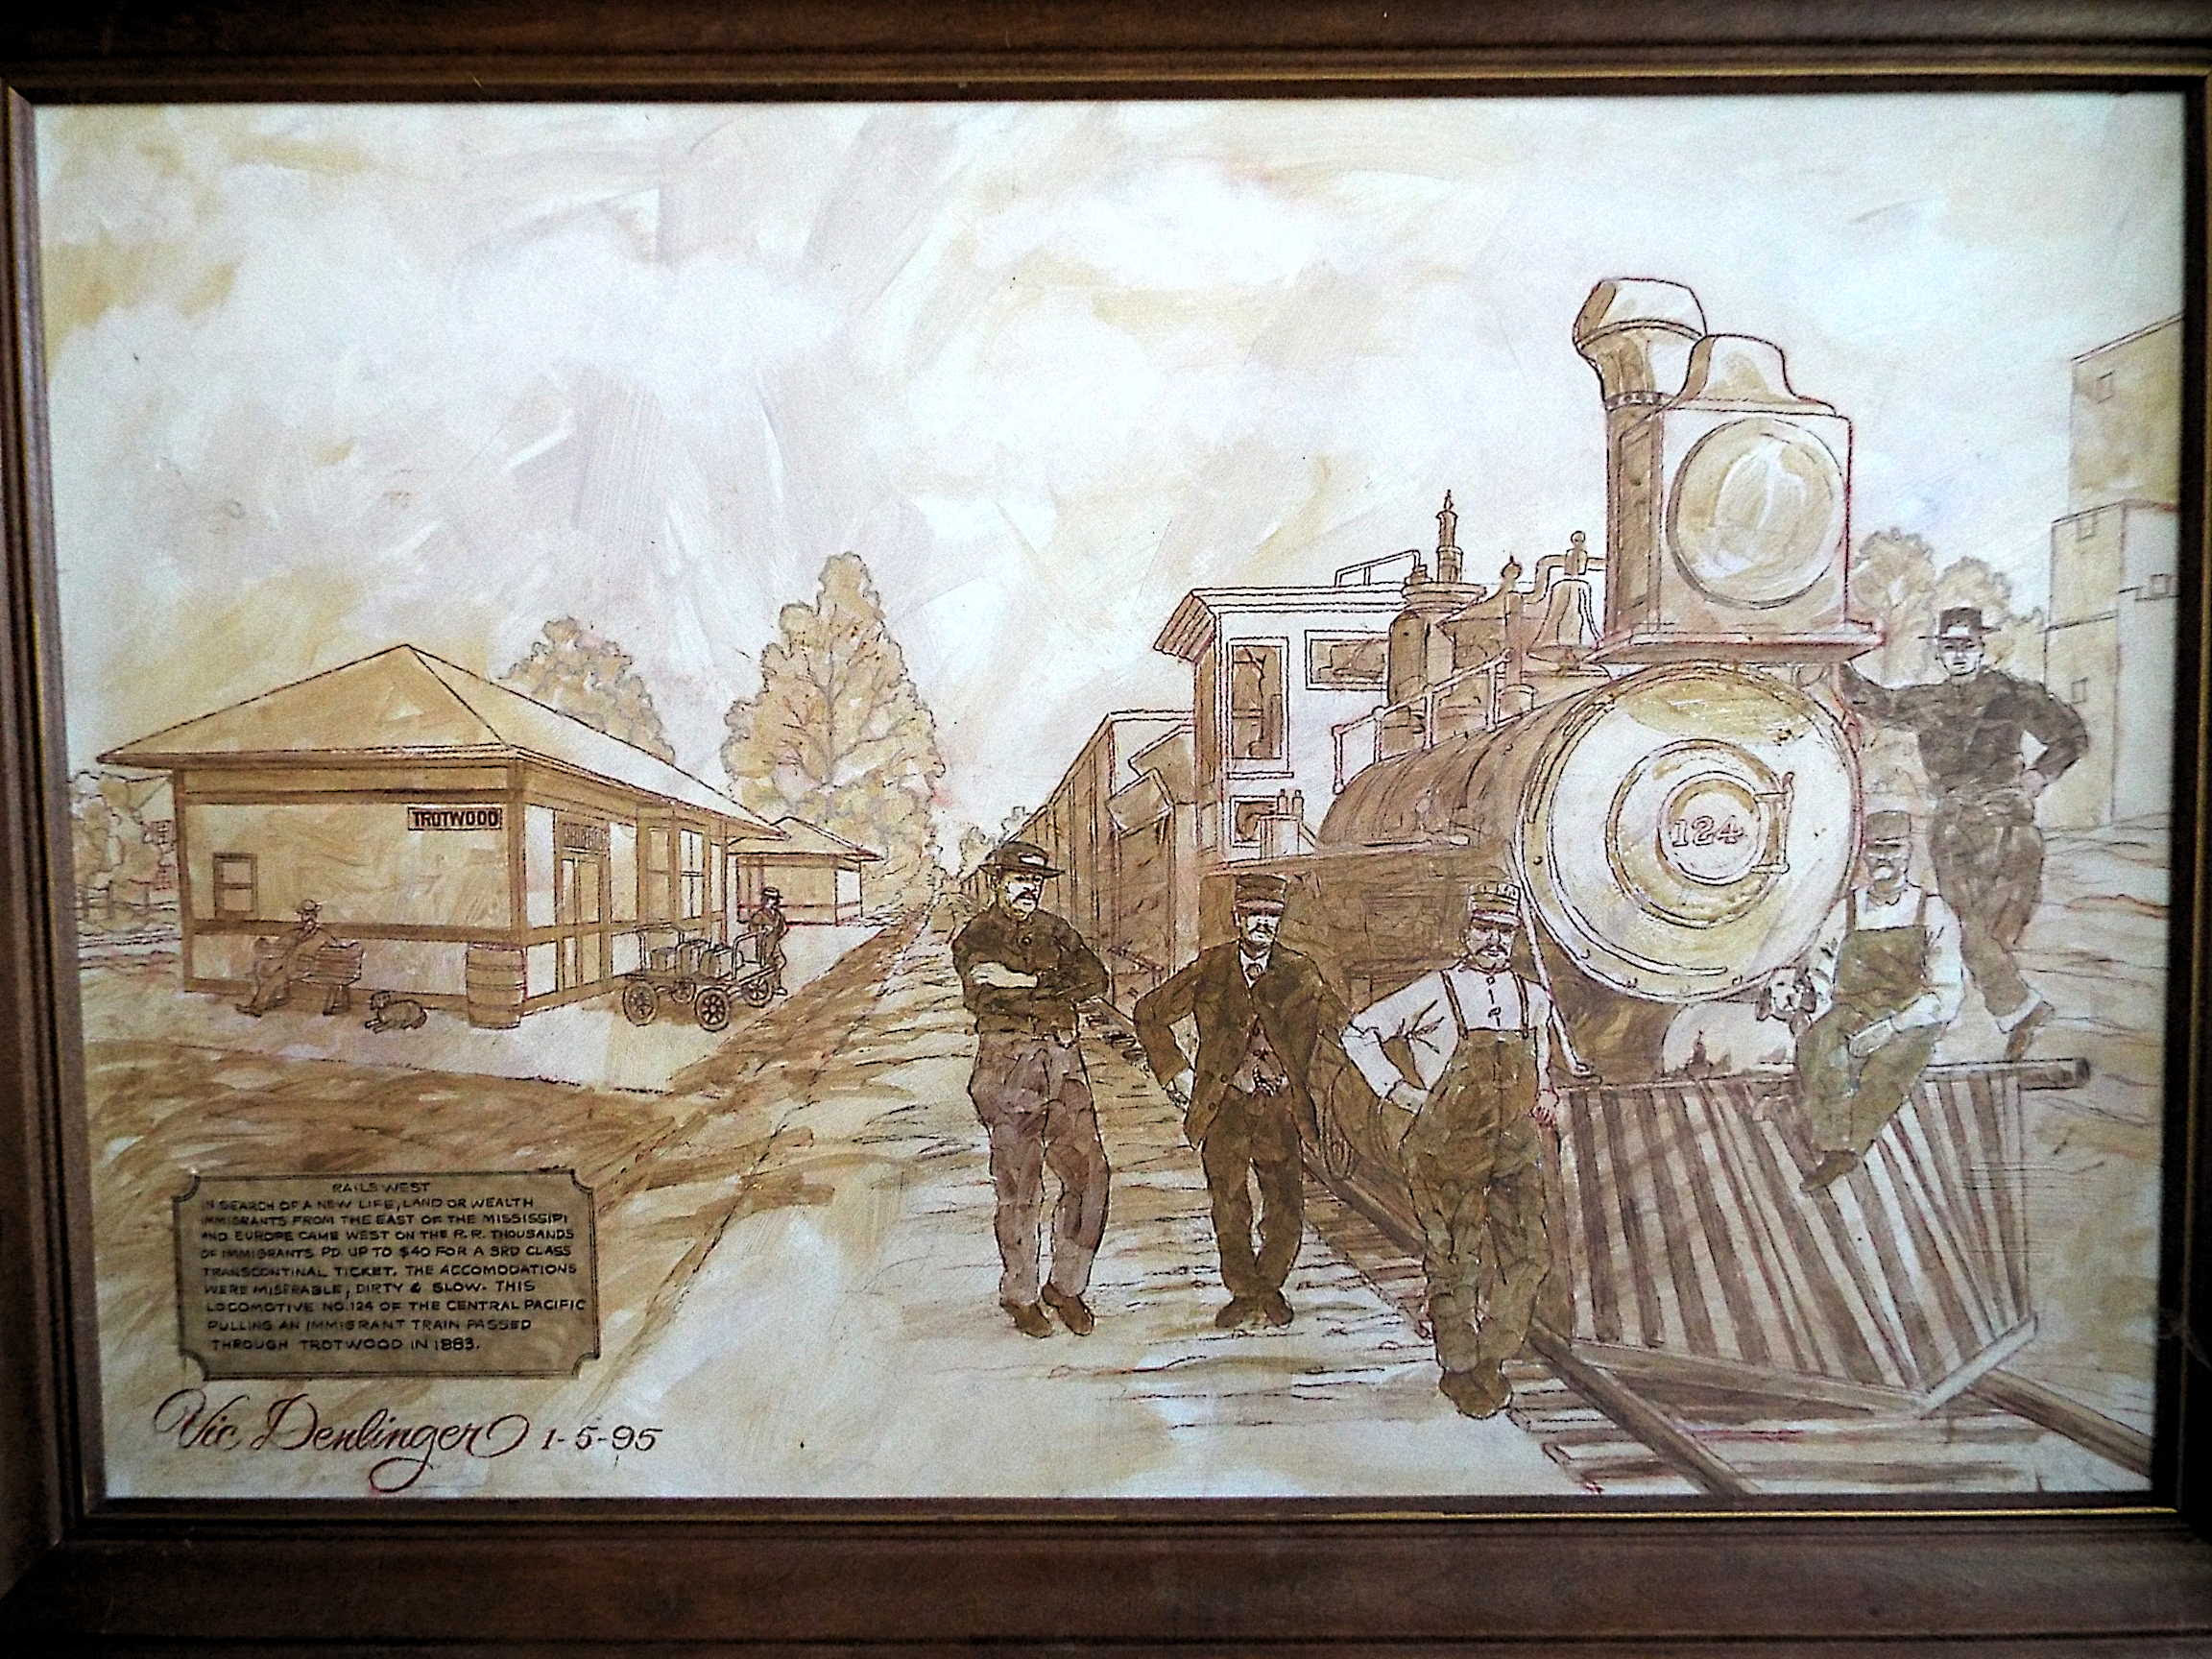 CPRR steam engine #124 pulling an emigrant train through Trotwood Ohio